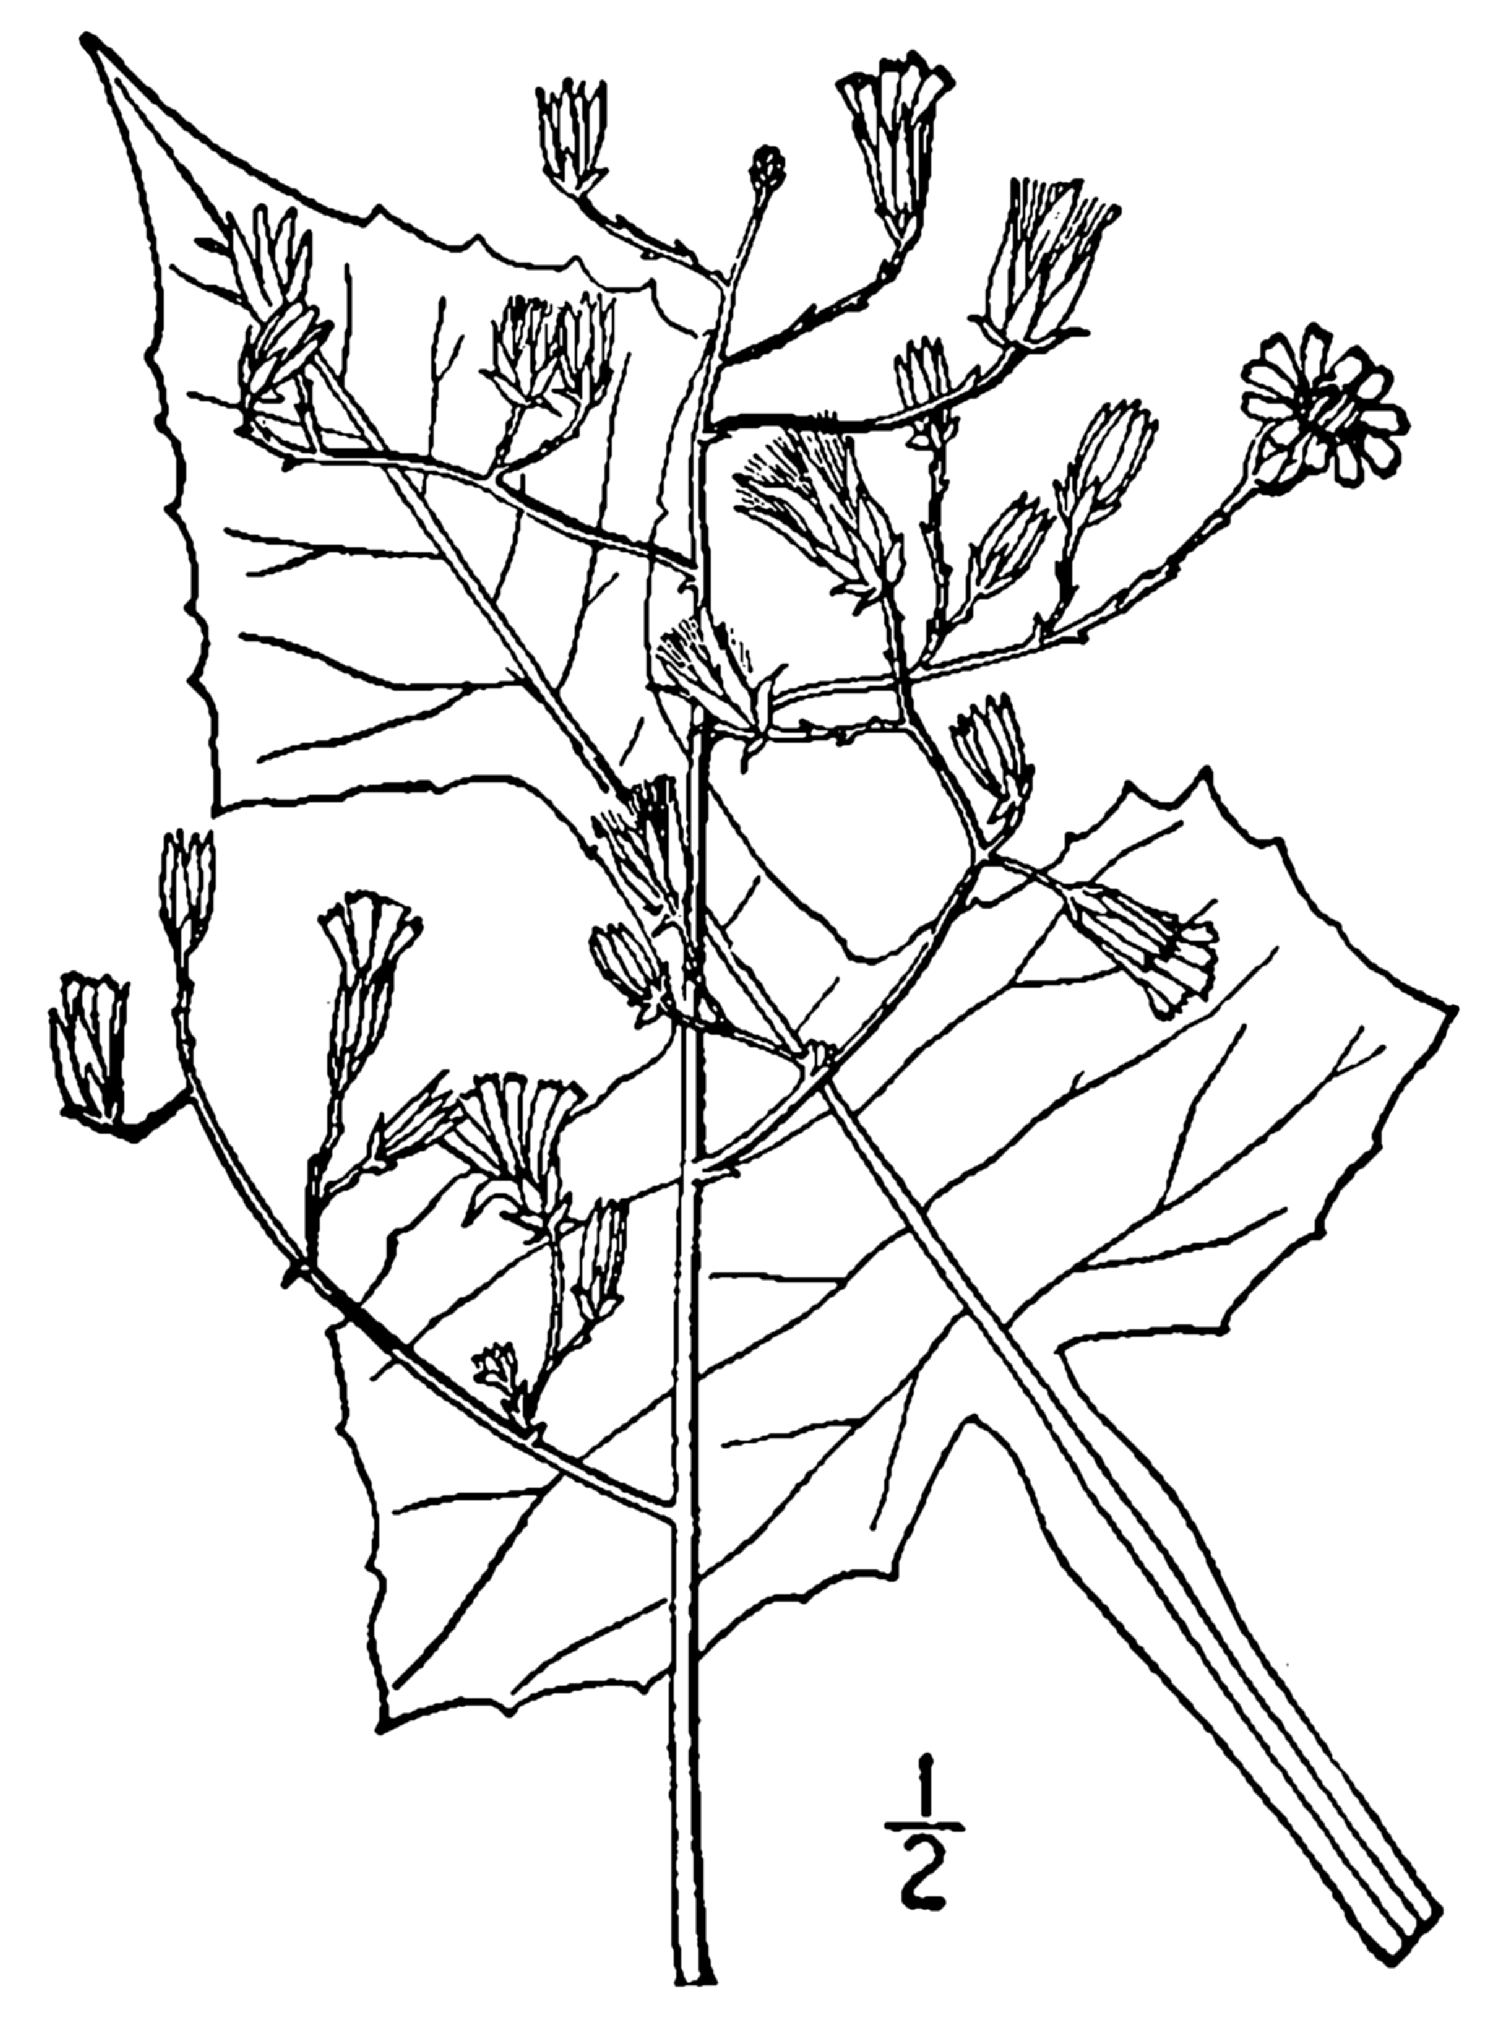 1913 botanical drawing of lactuca floridana.